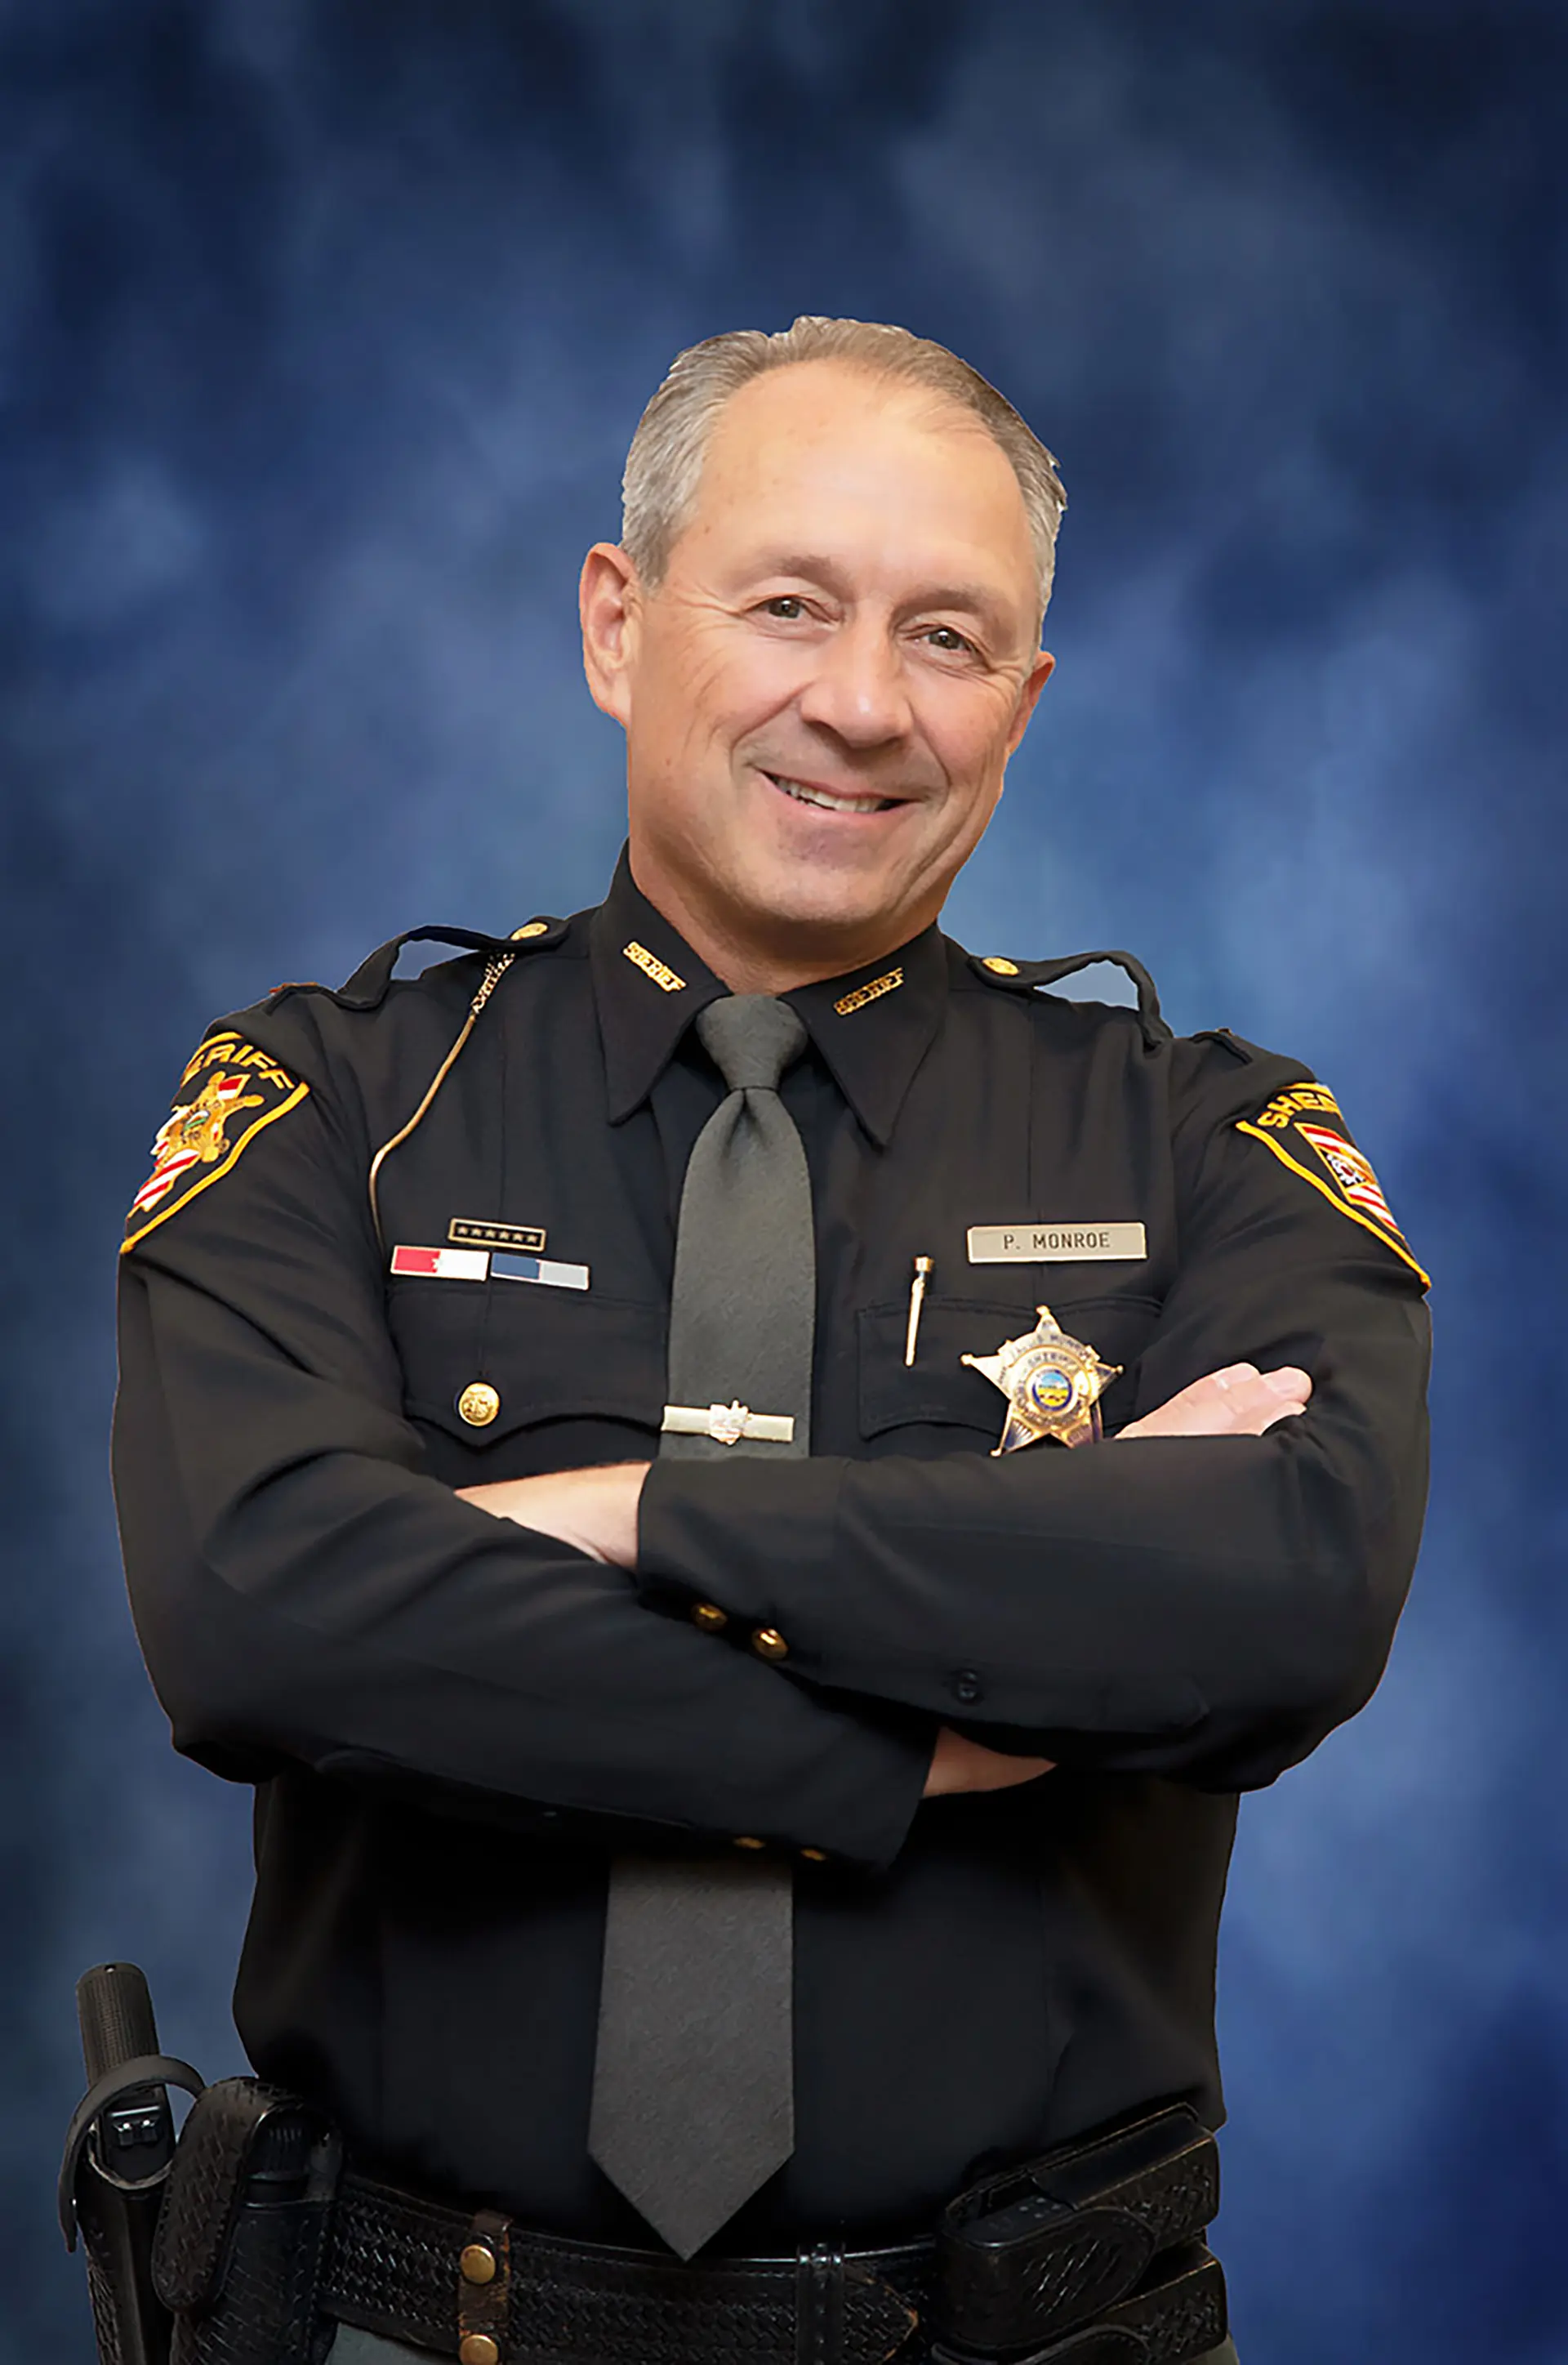 Trumbull County Sheriff Paul Monroe